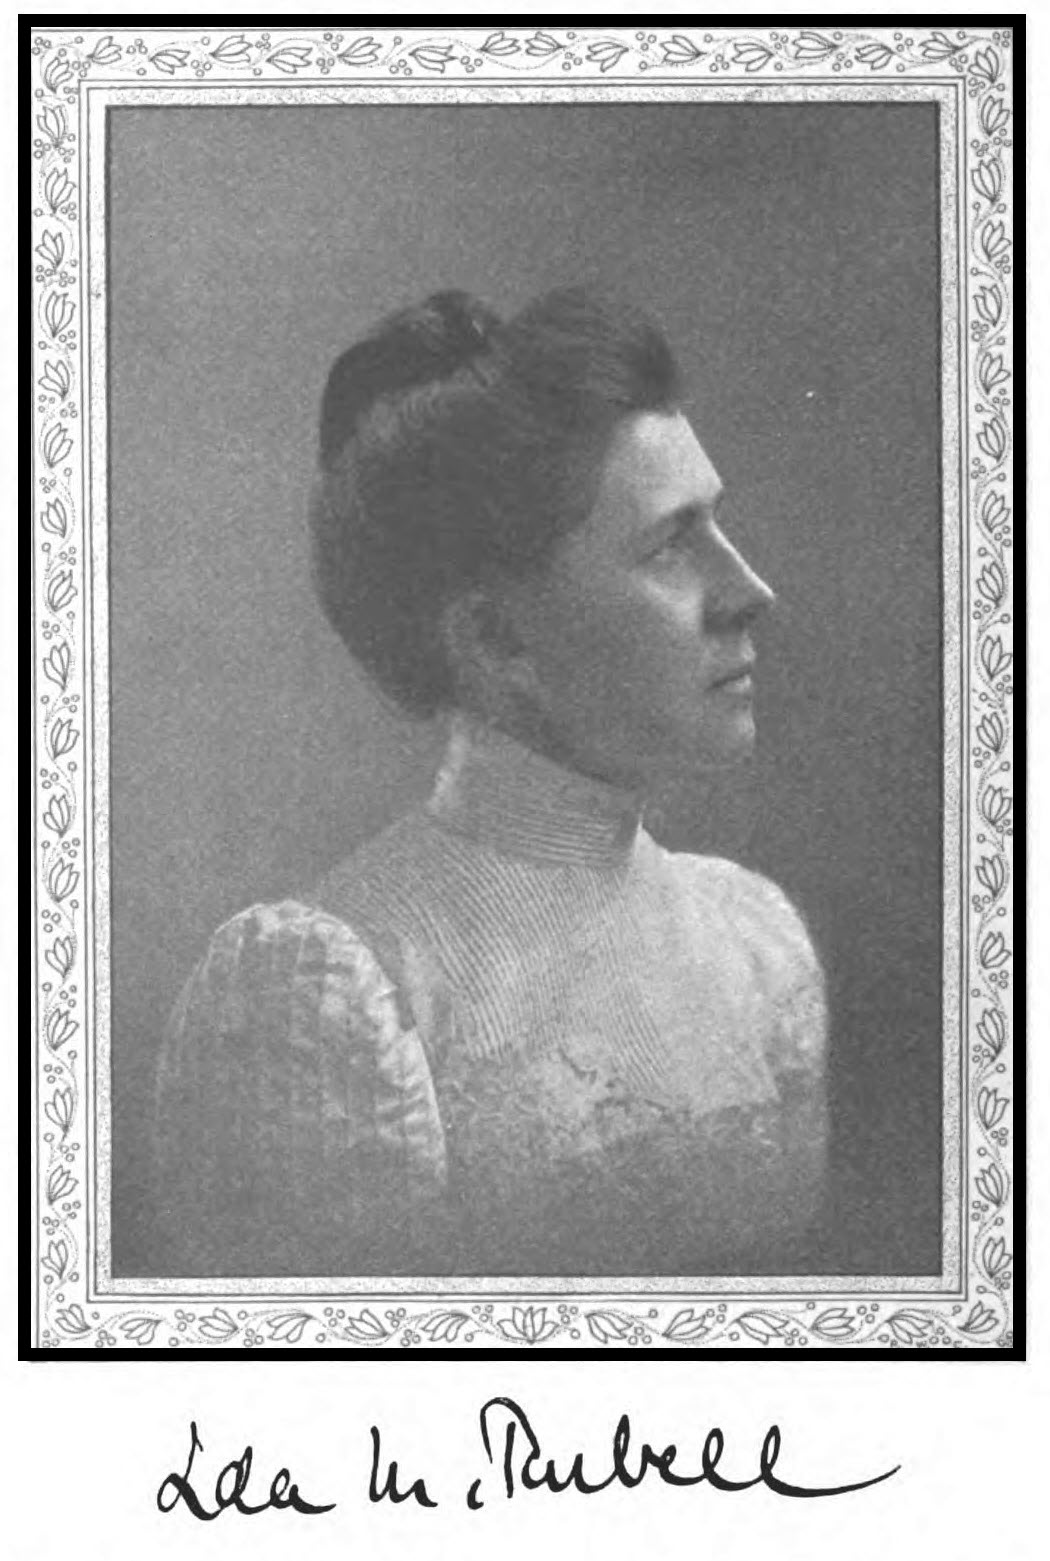 Portrait of Ida M. Tarbell with signature.